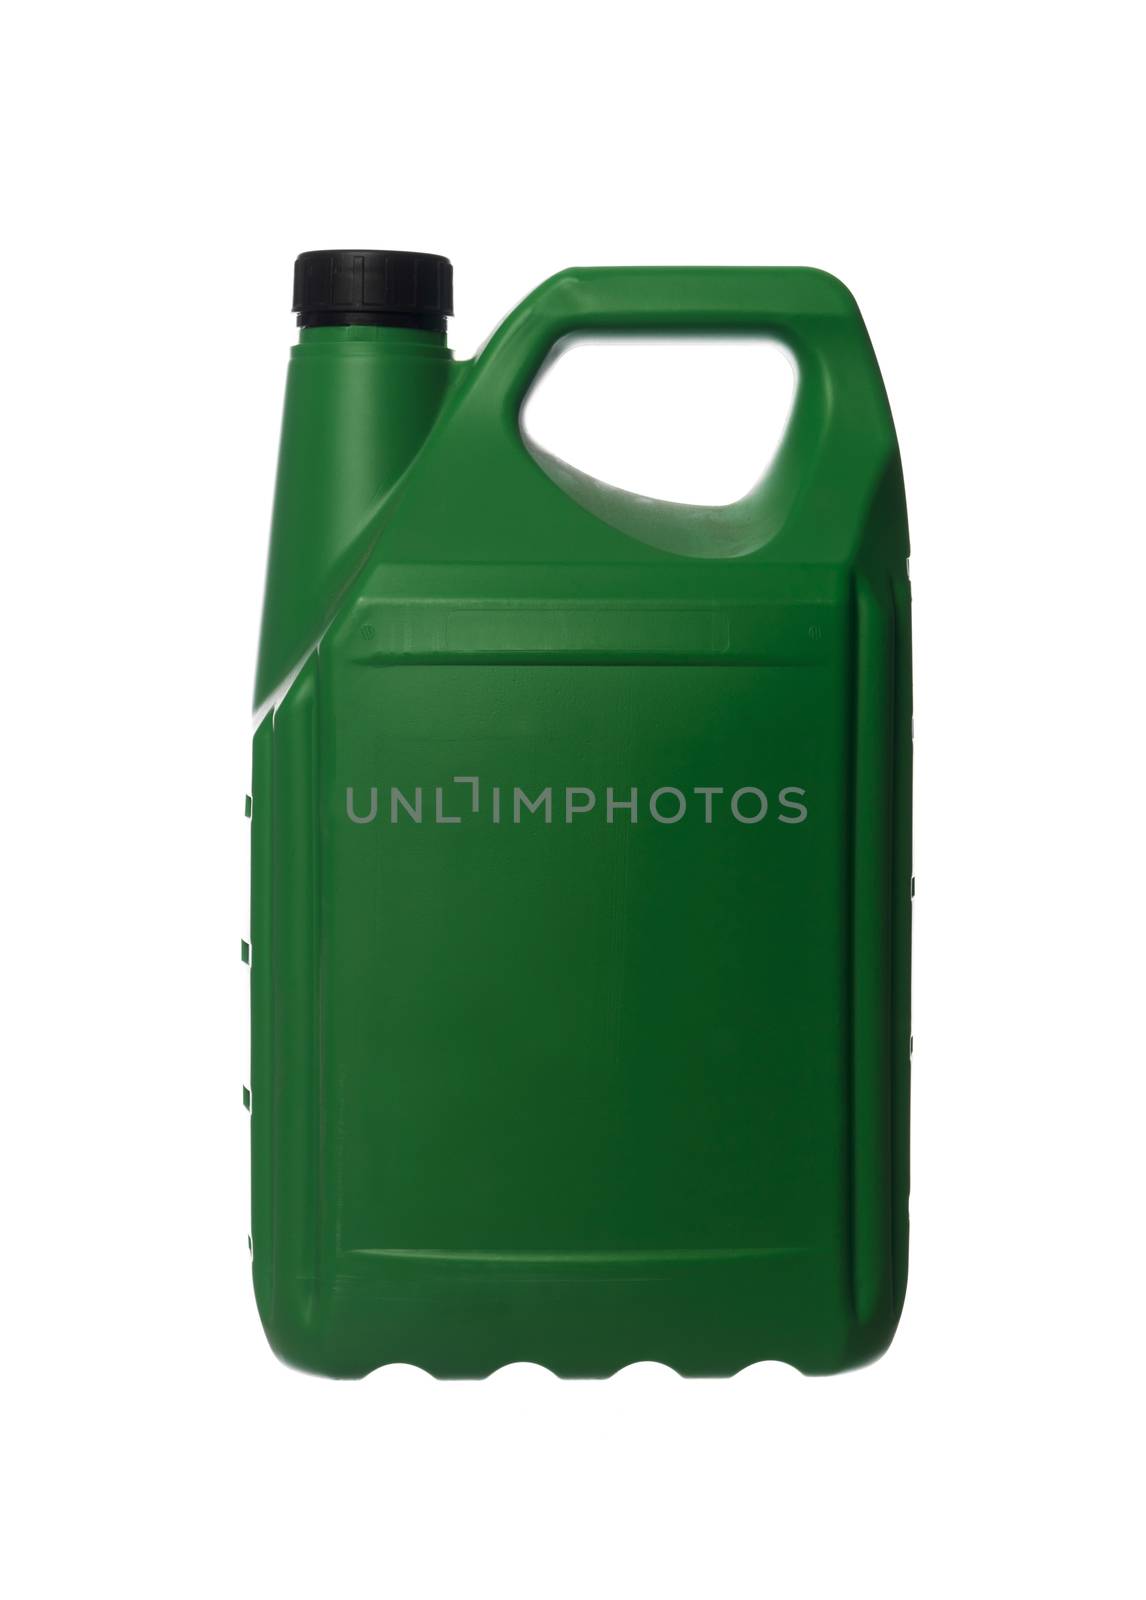 green plastic can by gemenacom